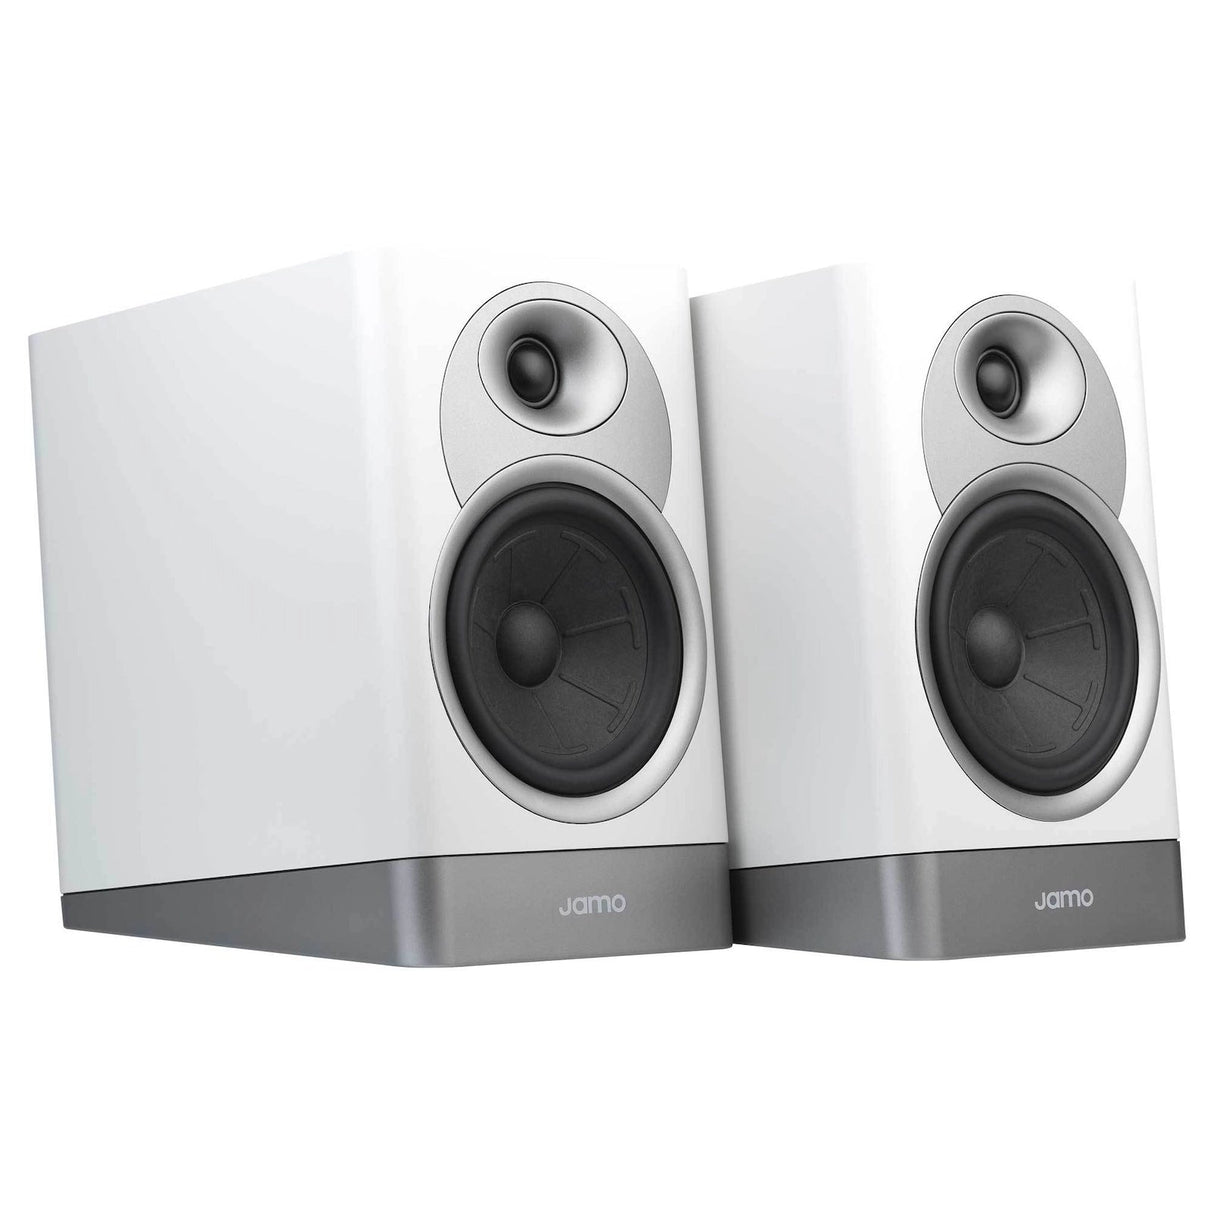 JAMO S7-15B Bookshelf Speakers Single 5.5” Woofer - K&B Audio